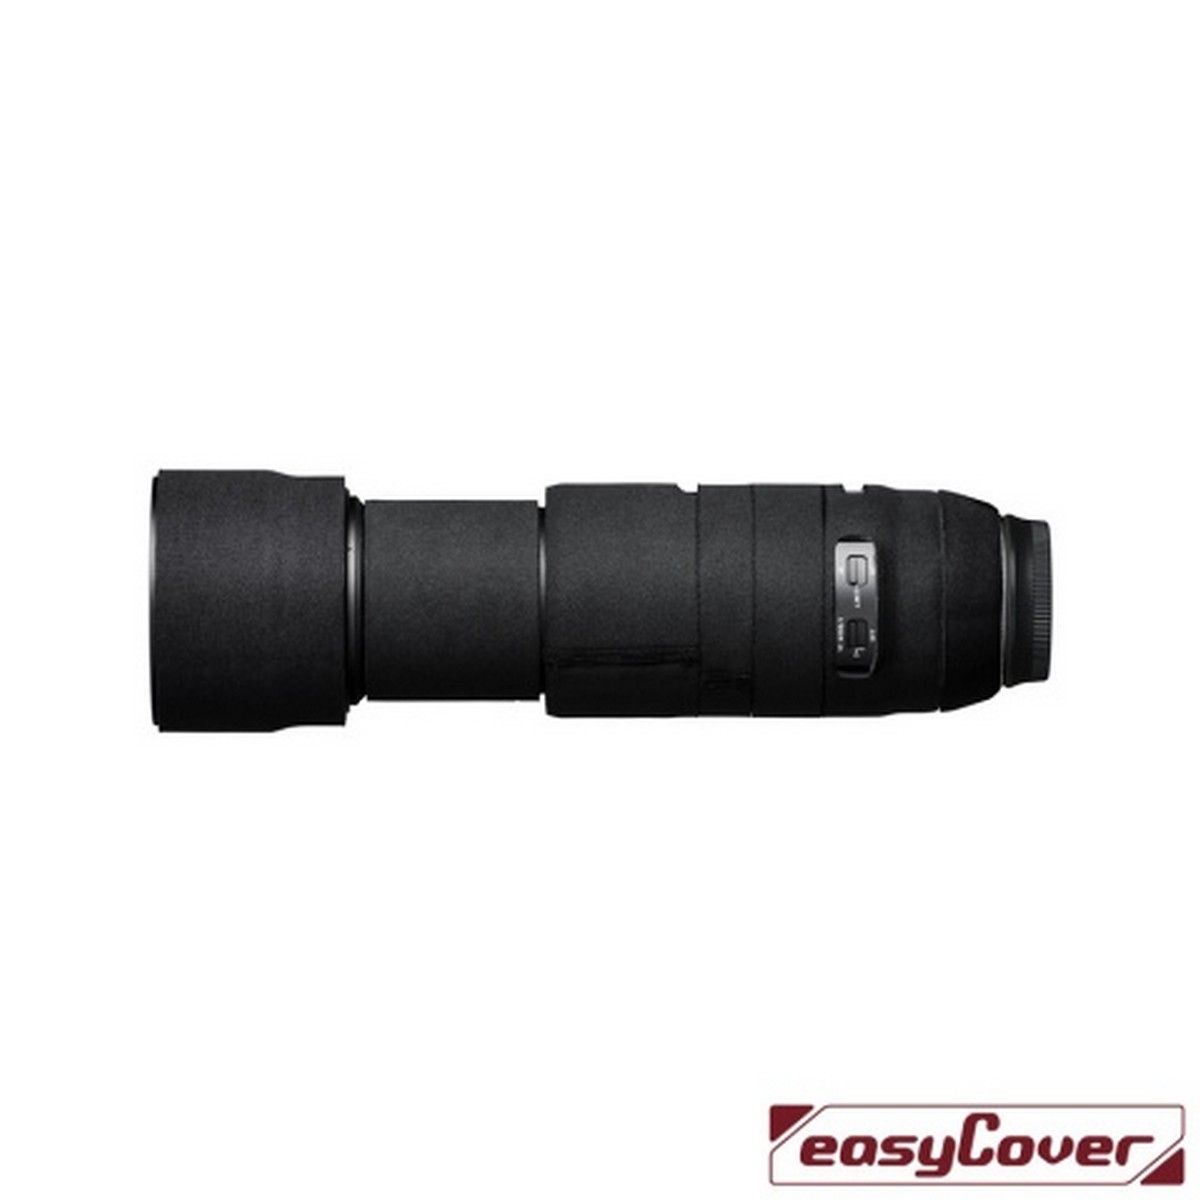 Easycover Lens Oak Objektivschutz für Tamron 100-400 mm 1:4,5-6,3 Di VC USD (Model A035) Schwarz